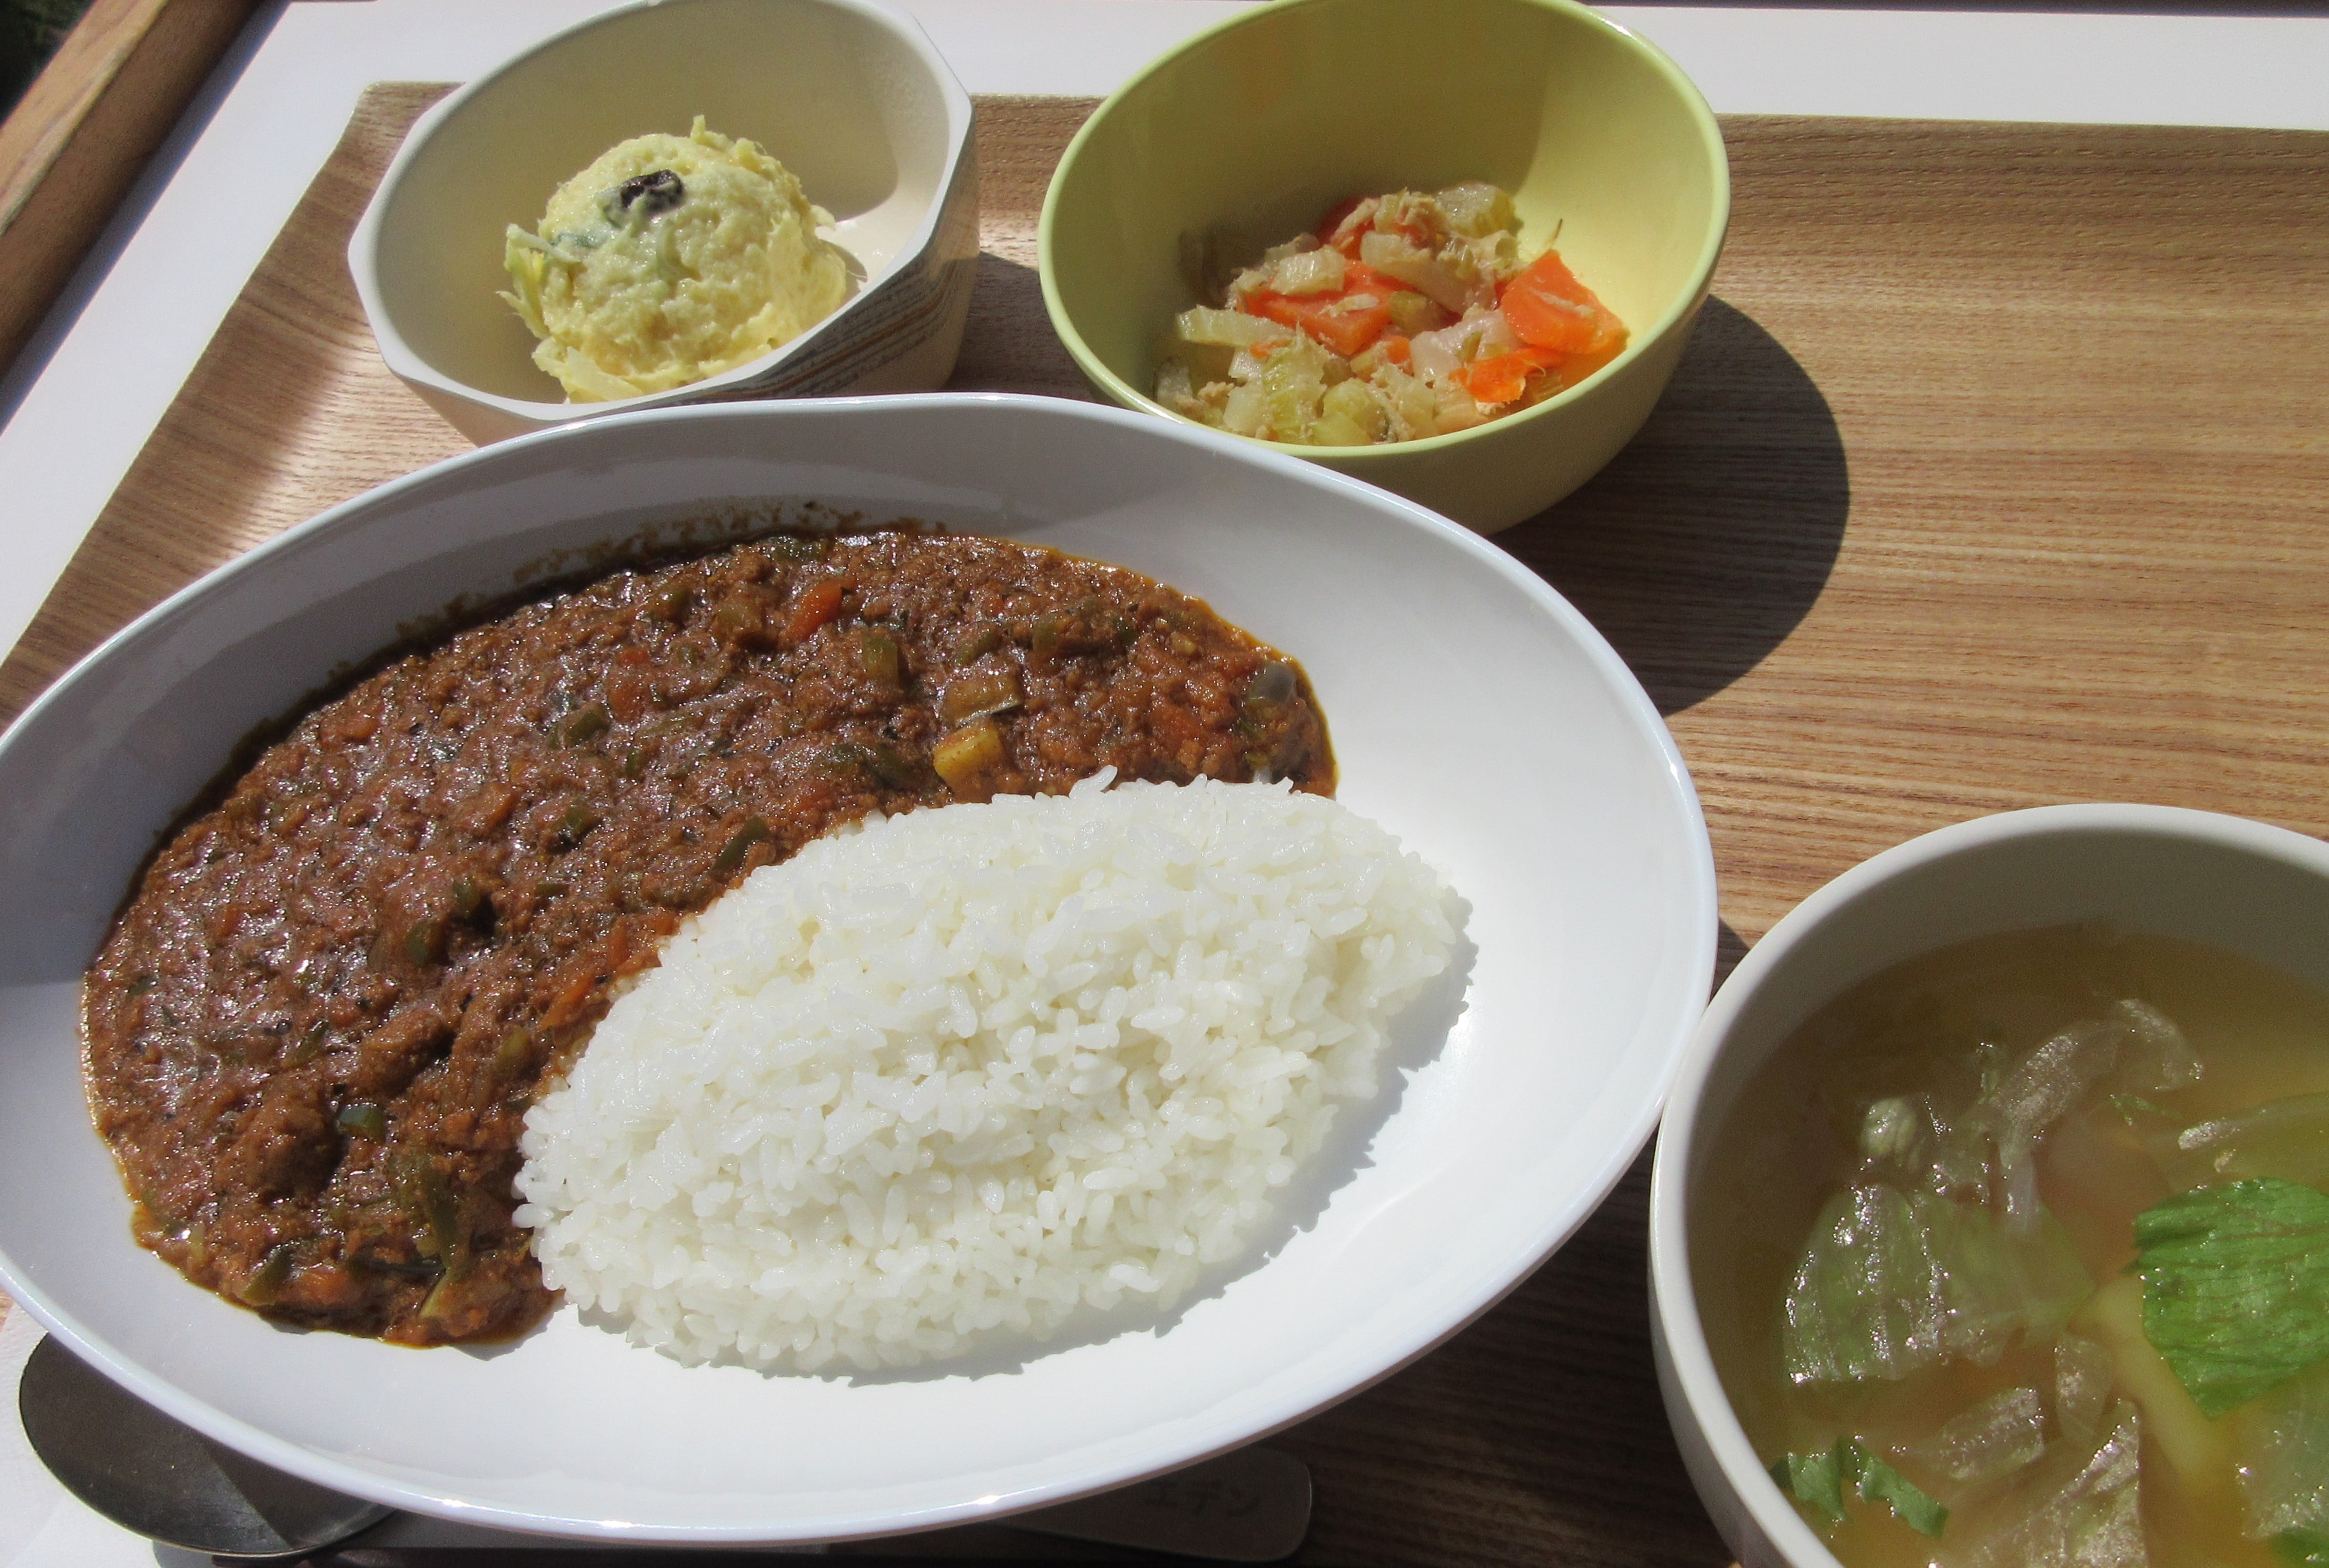 Ｂ食　夏野菜のドライカレー　レタスのスープ　副菜：セロリとツナの塩炒め　小鉢：さつま芋サラダ

